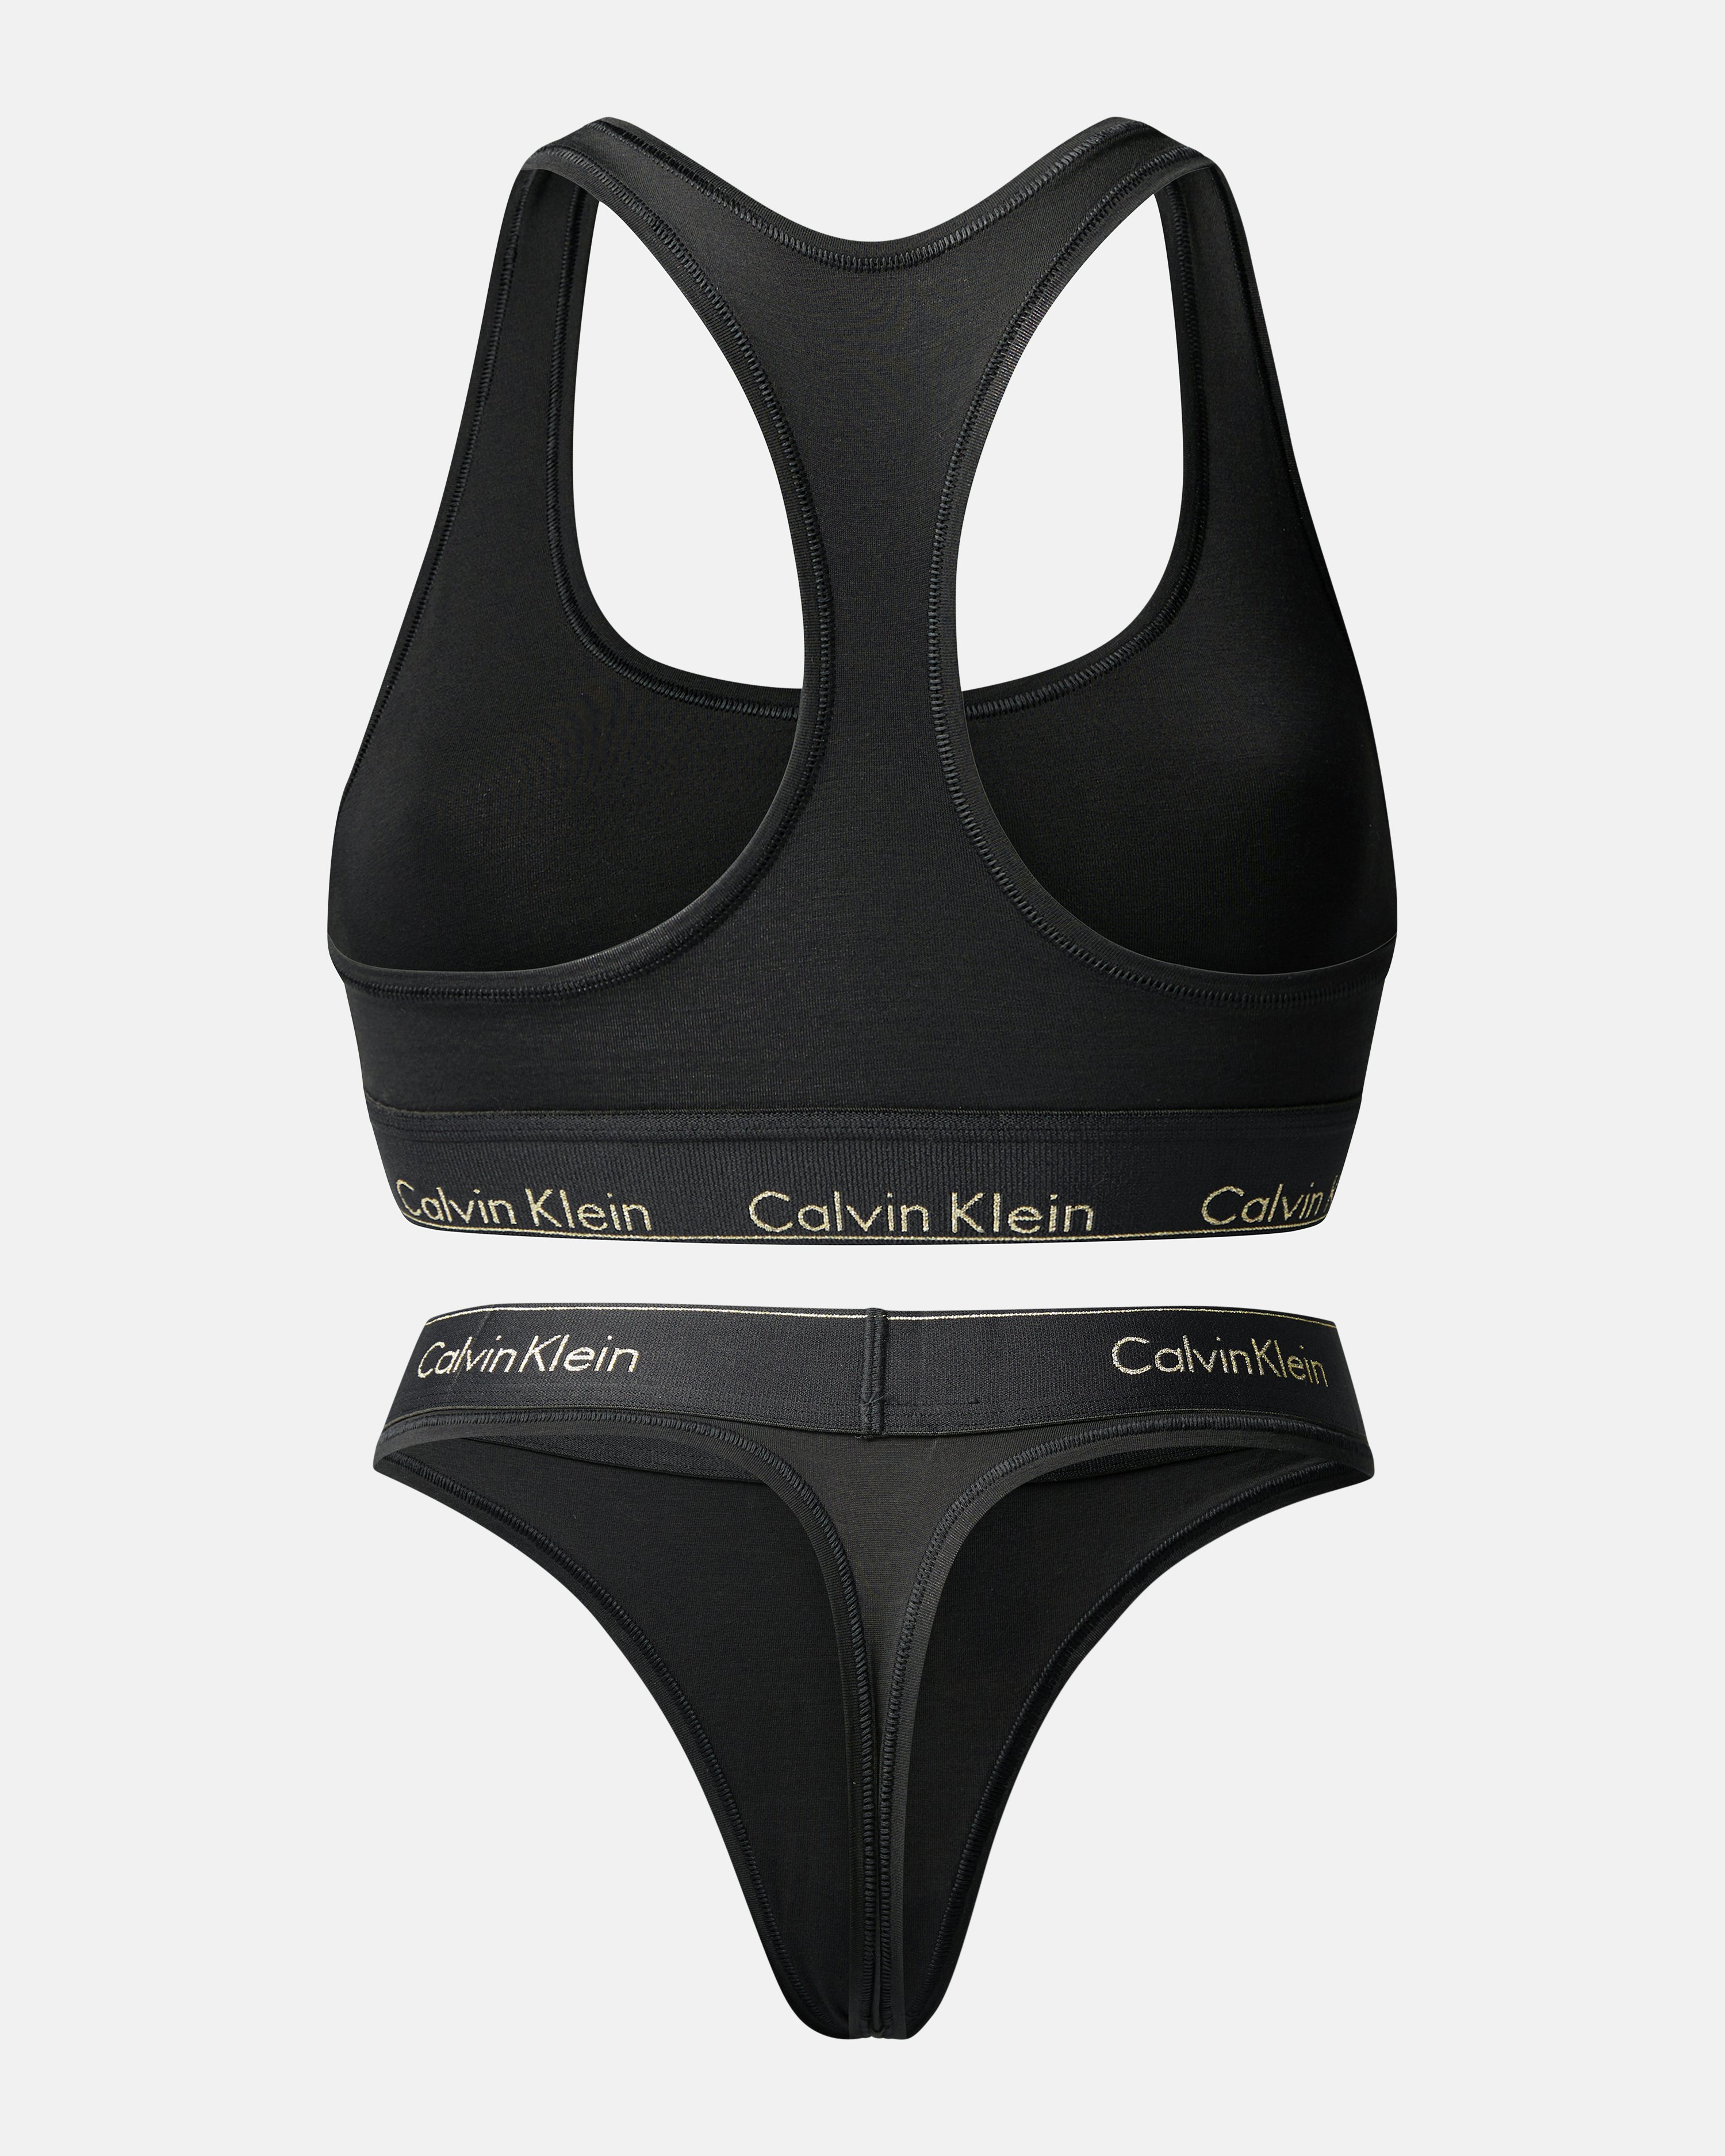 Calvin Klein Women's Cotton Bralette and Thongs Underwear Set in Black -  INTOTO7 Menswear